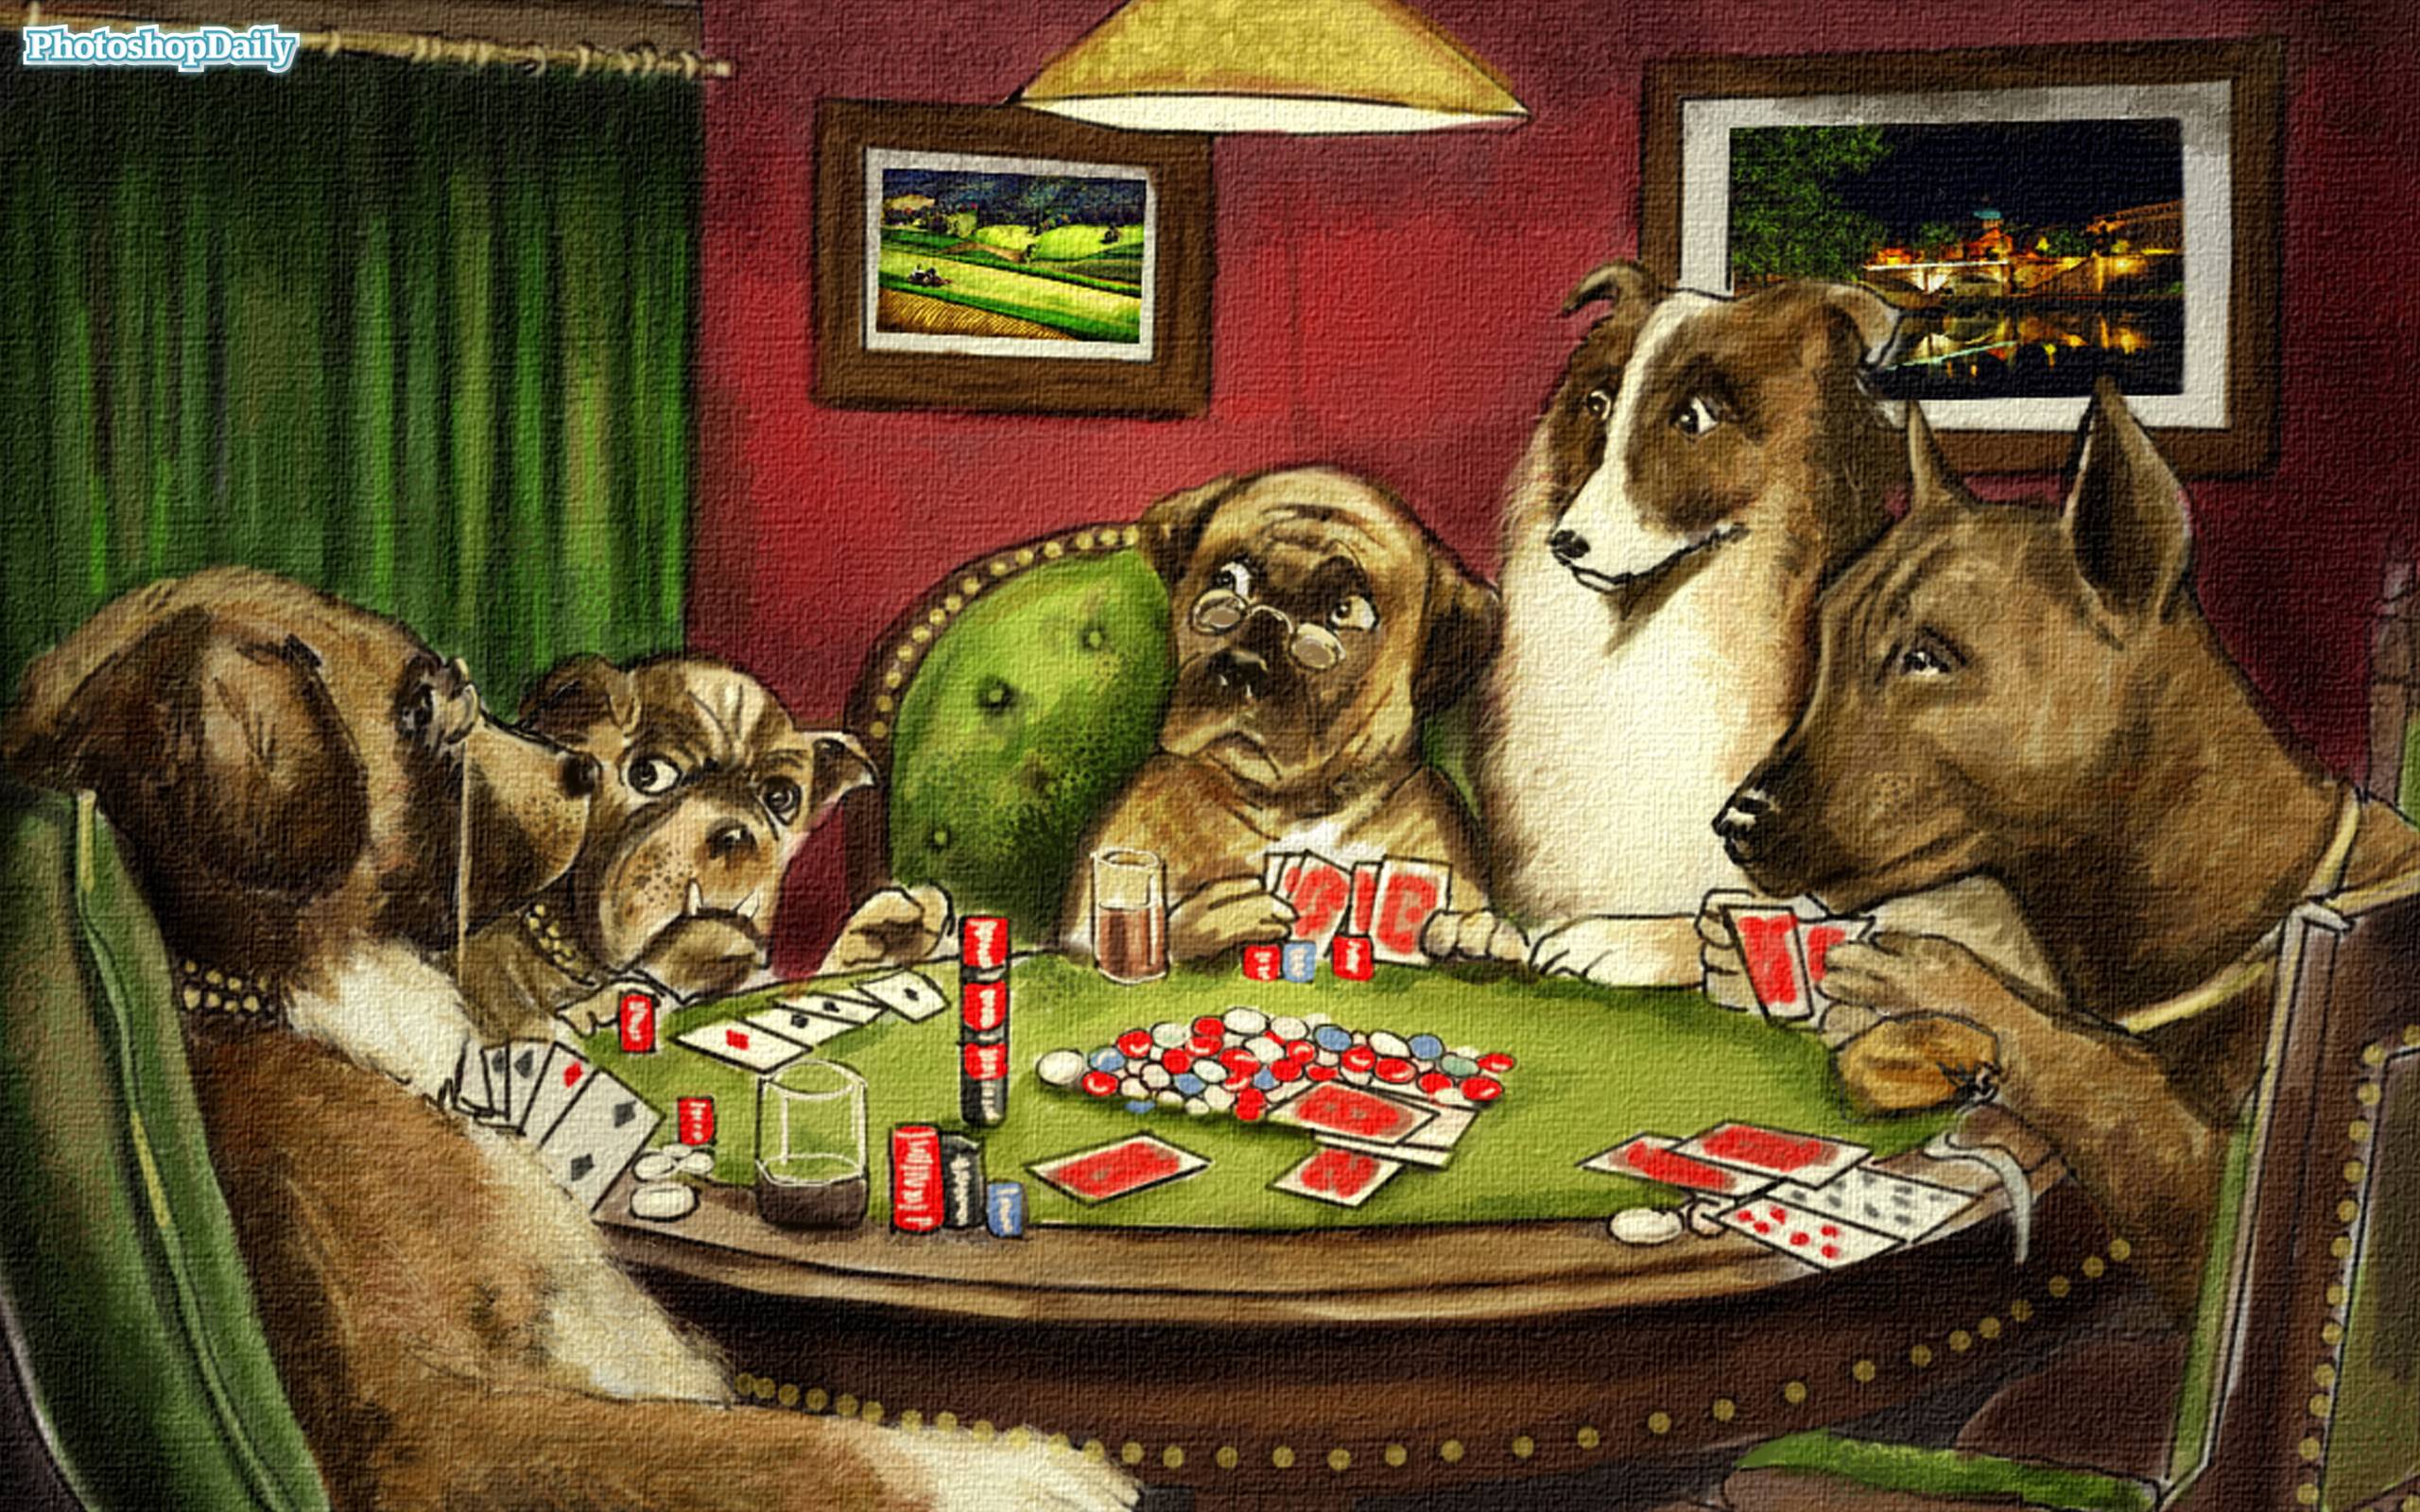 poker dog server